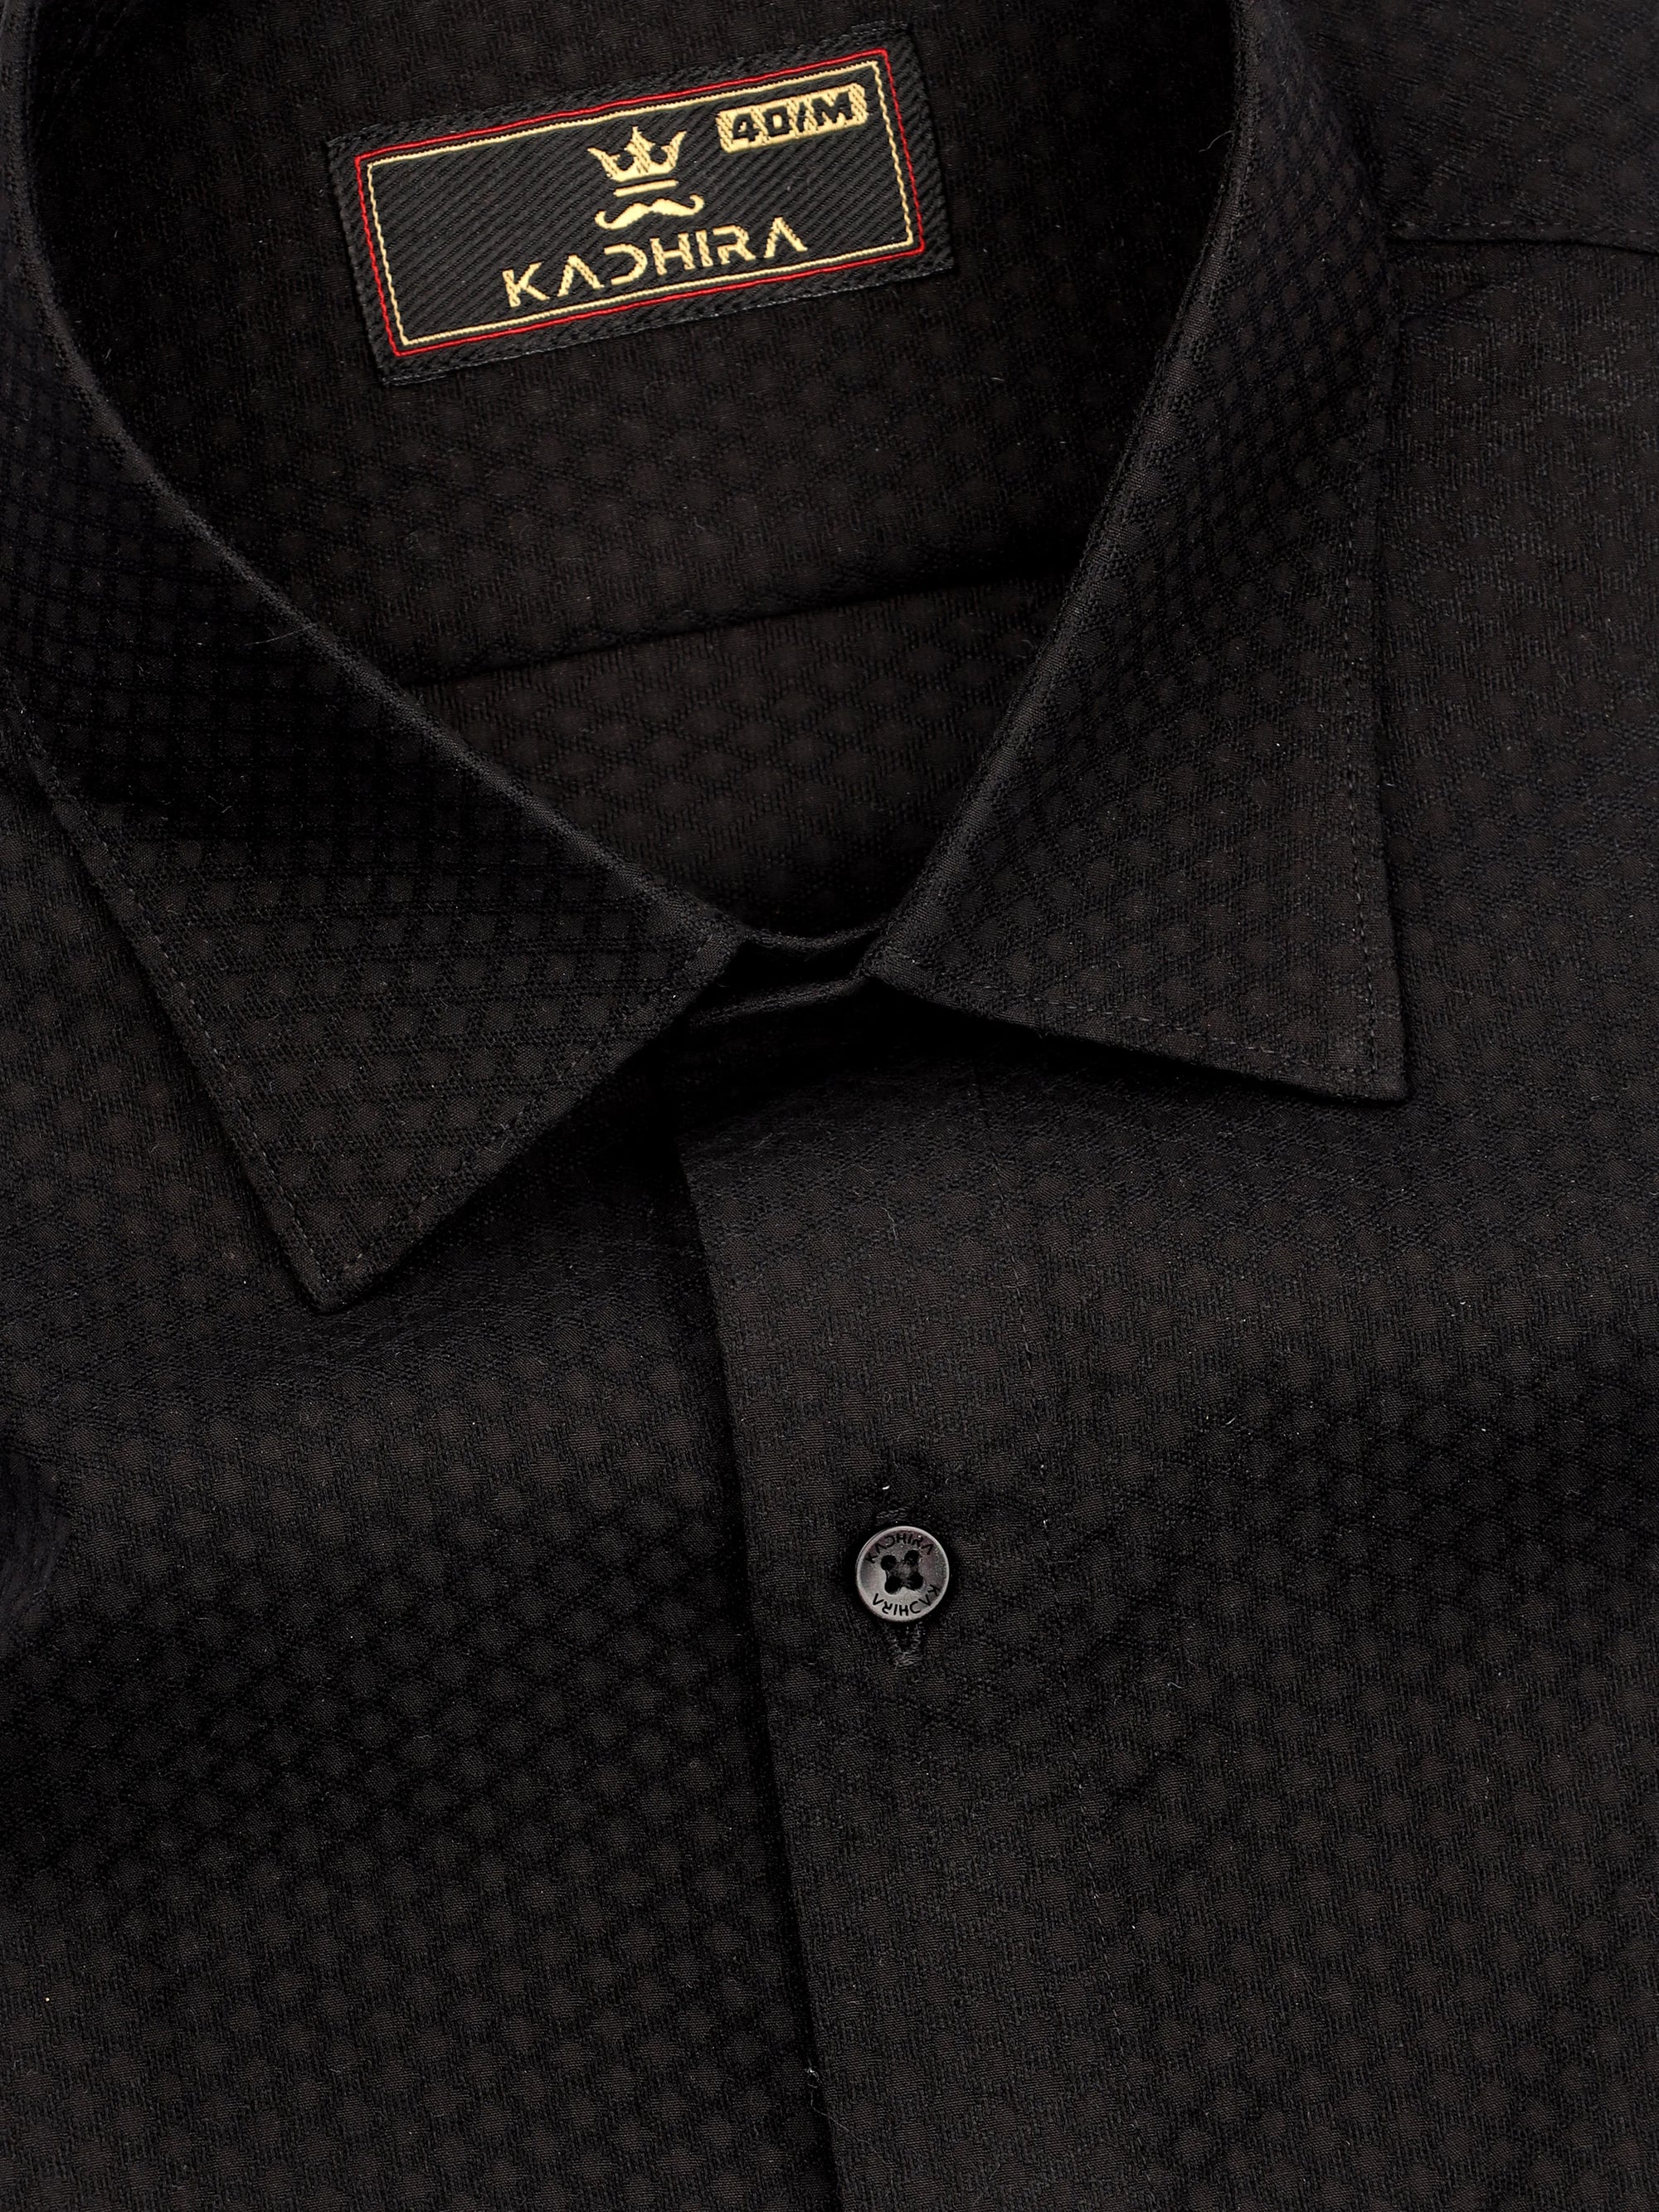 Super Black Dobby Textured Premium Cotton Shirt